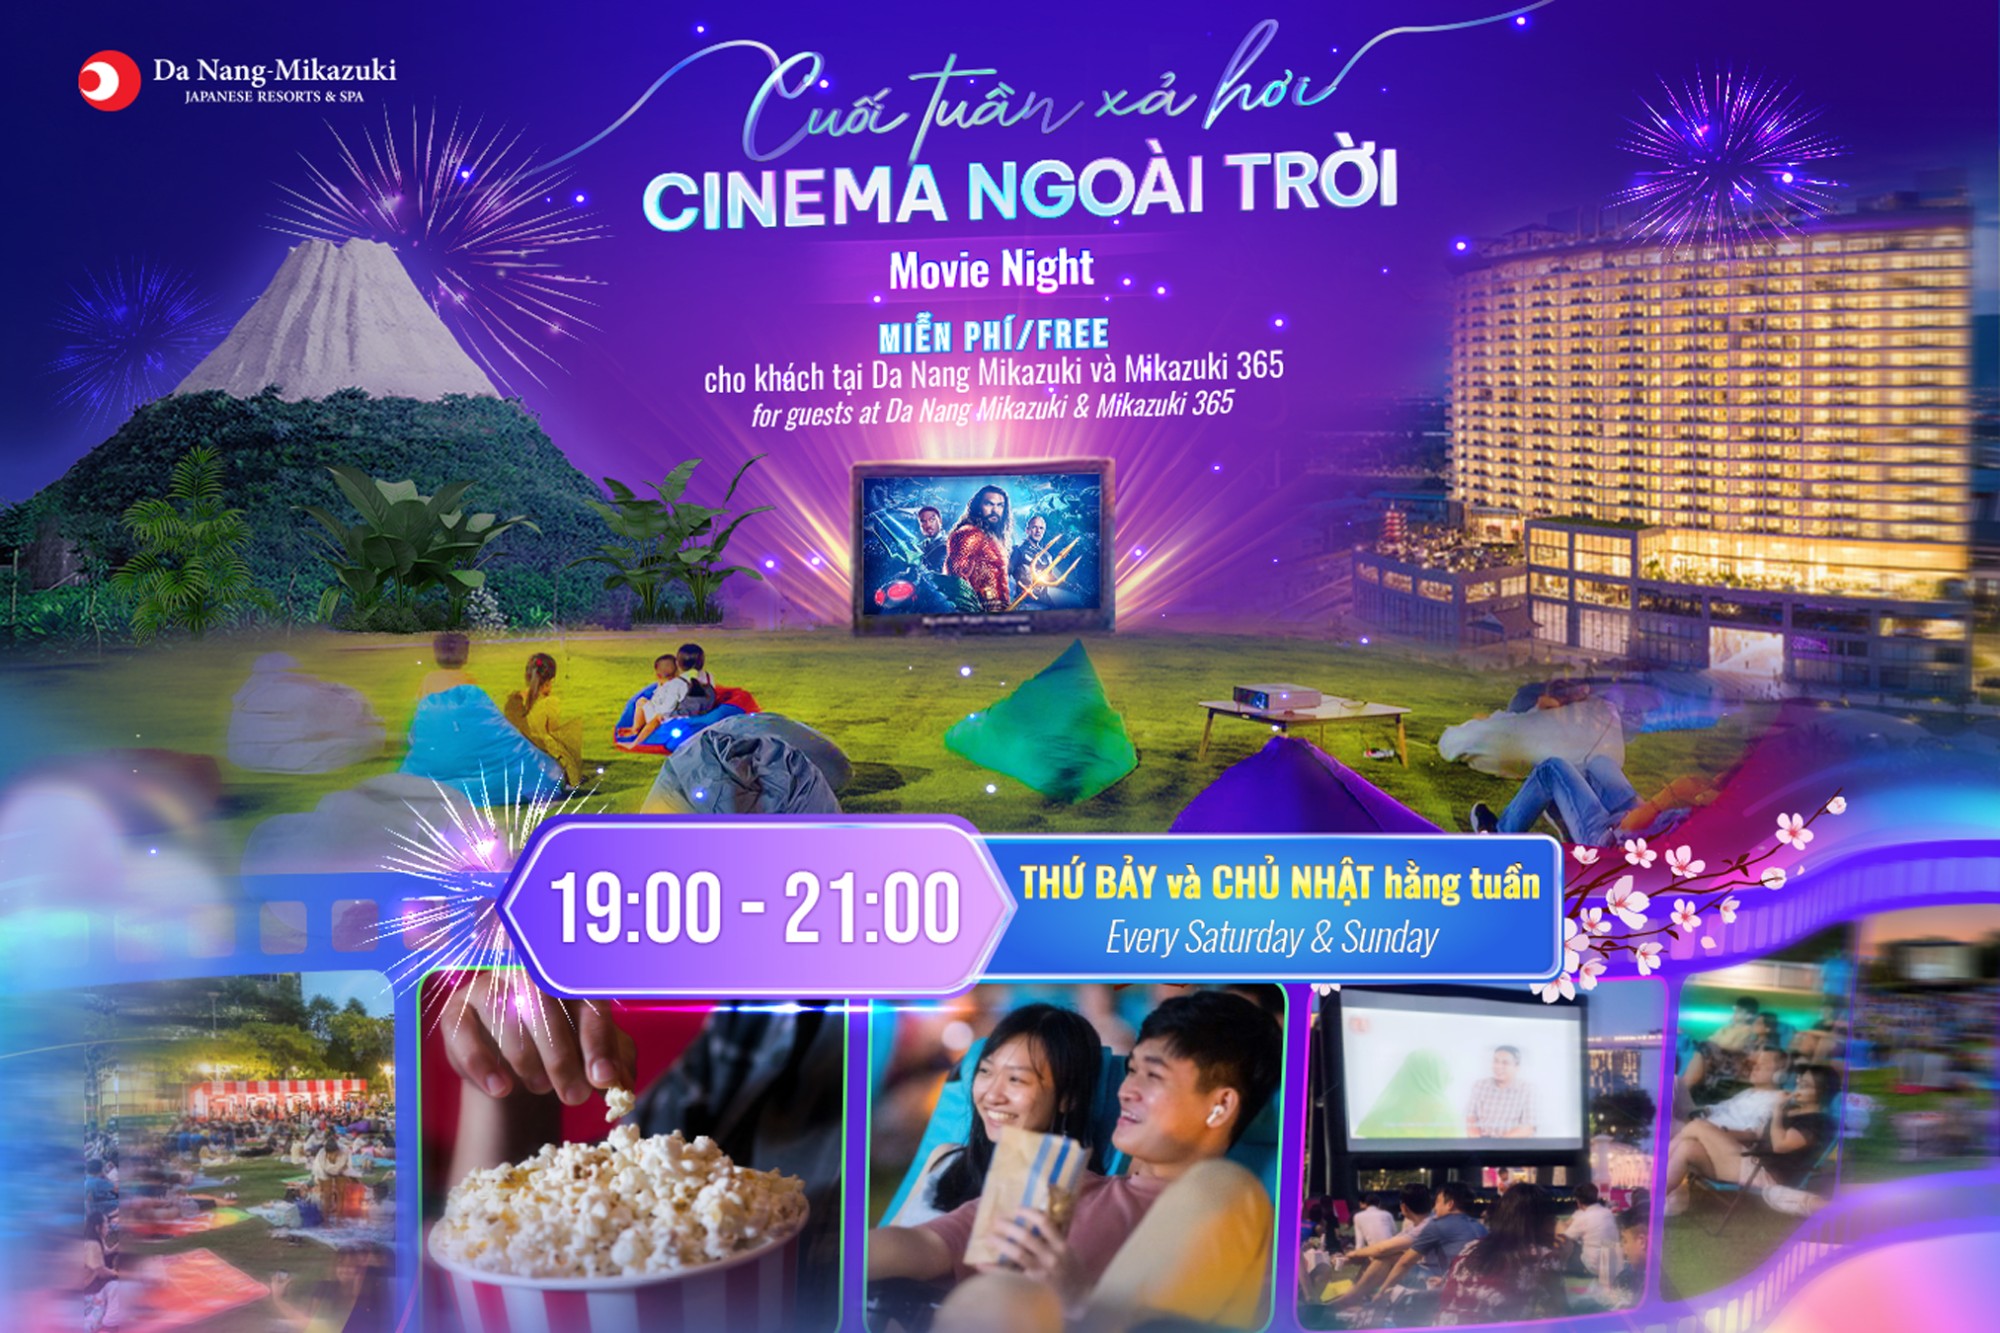 Cinema Ngoai troi   Main   FIX   2x3 Web